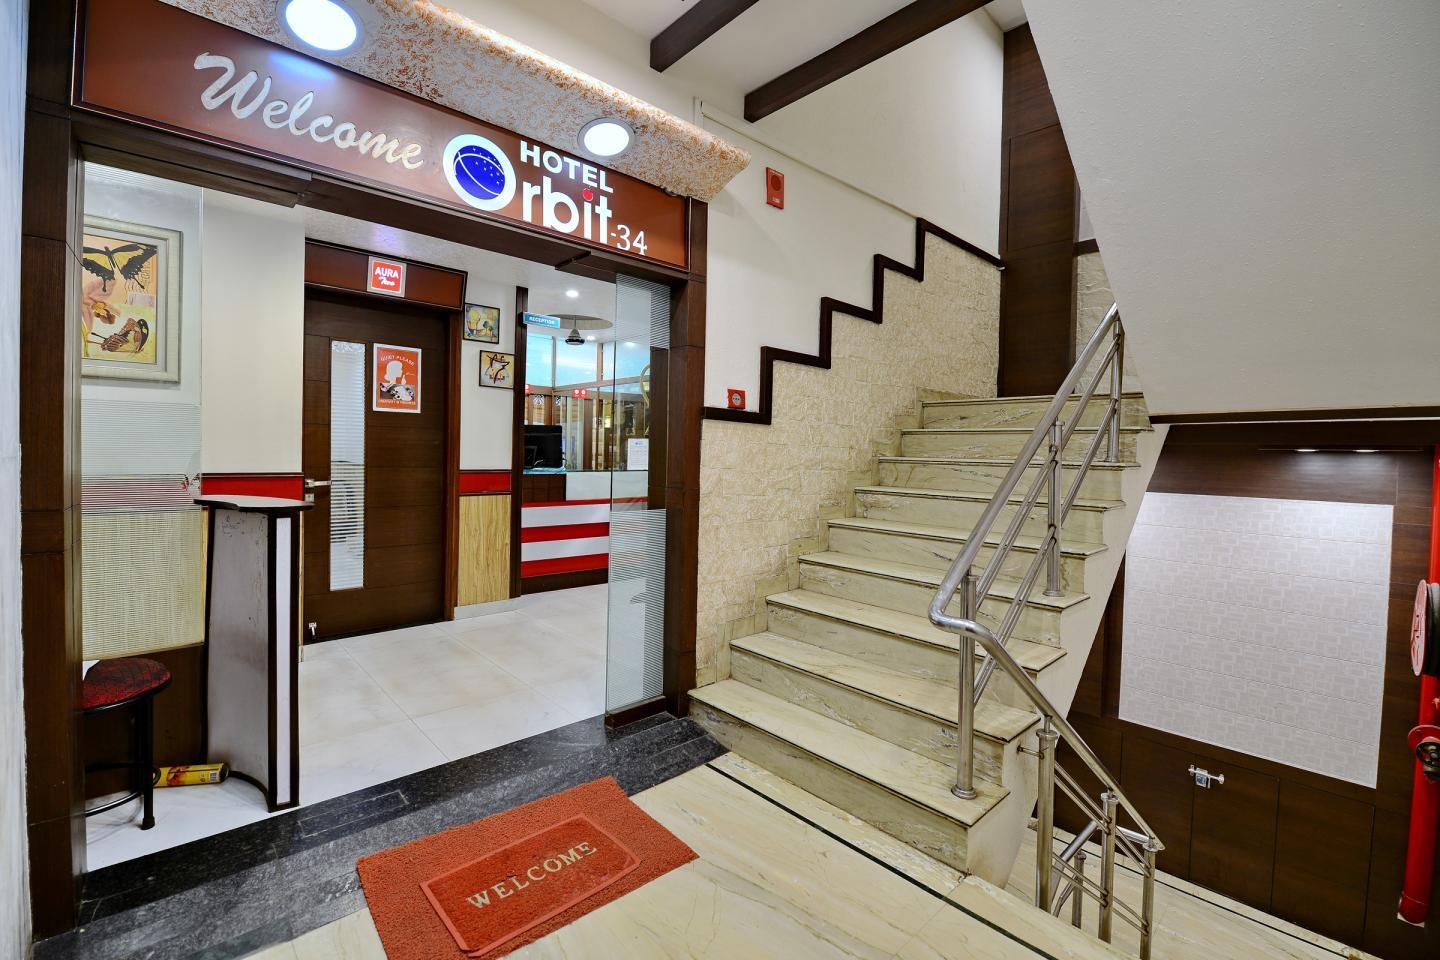 Hotel Orbit 34 (Chandigarh)